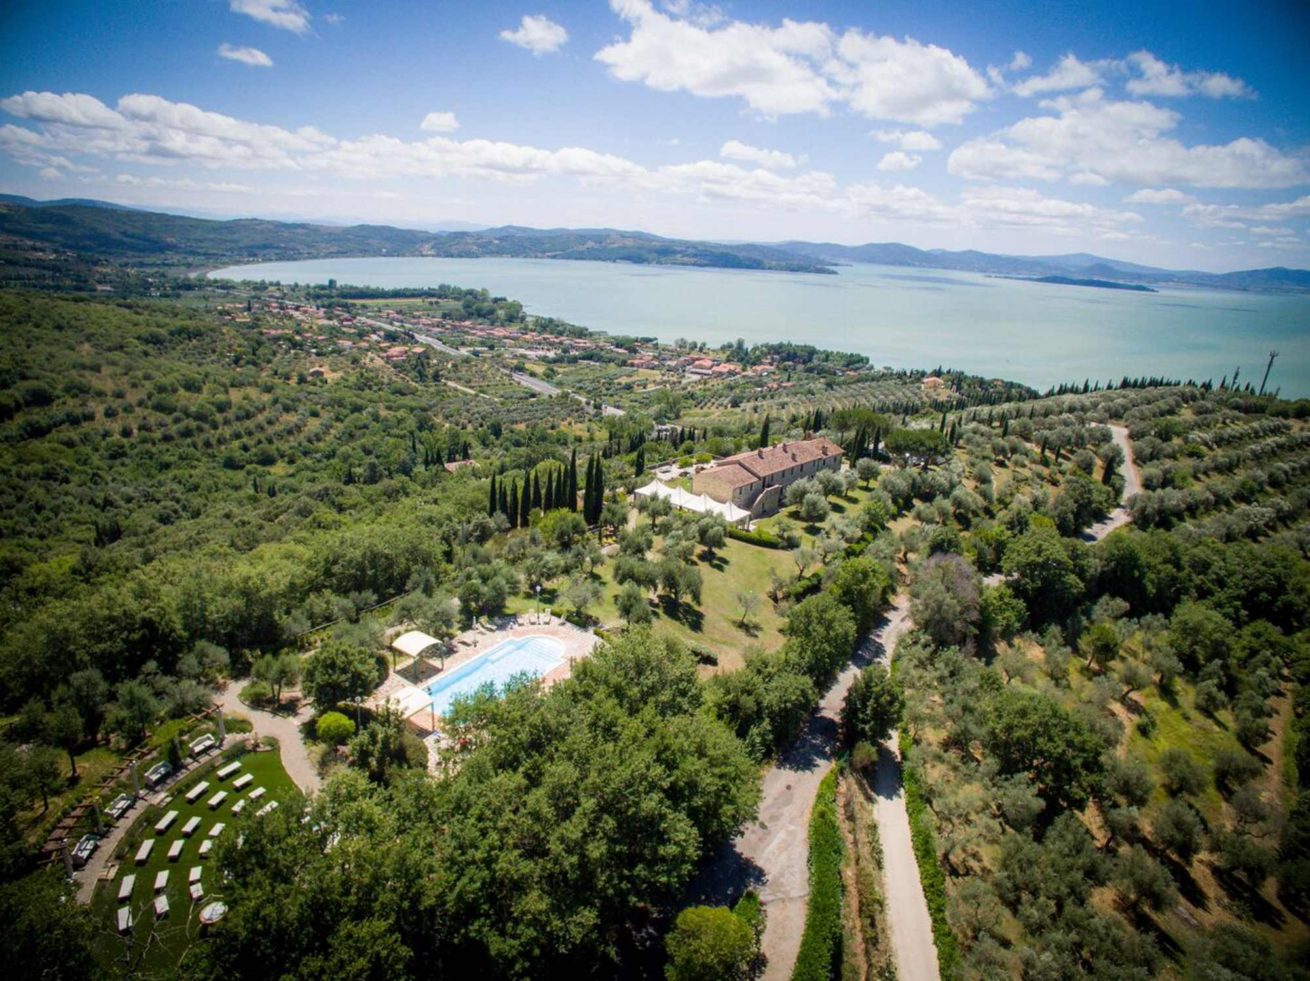 Outdoor Wedding Villa Italy. amazing-view-of-the-pool-area-garden-temple-villa-and-lake-trasimeno